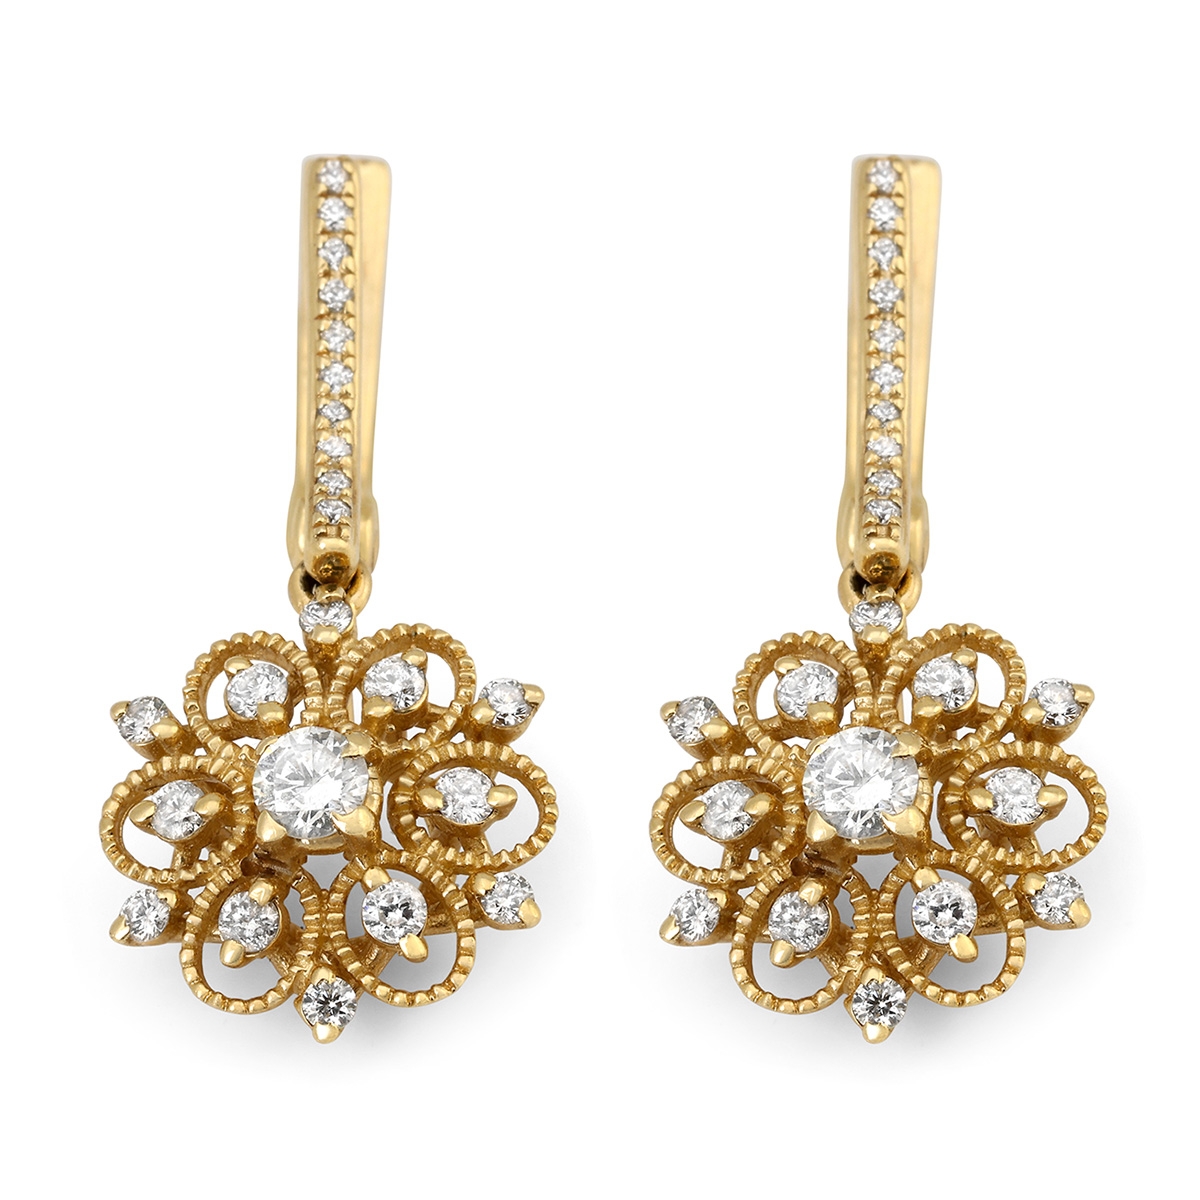 Anbinder Jewelry 14K Yellow Gold Dainty Flower Earrings with Diamonds - 1